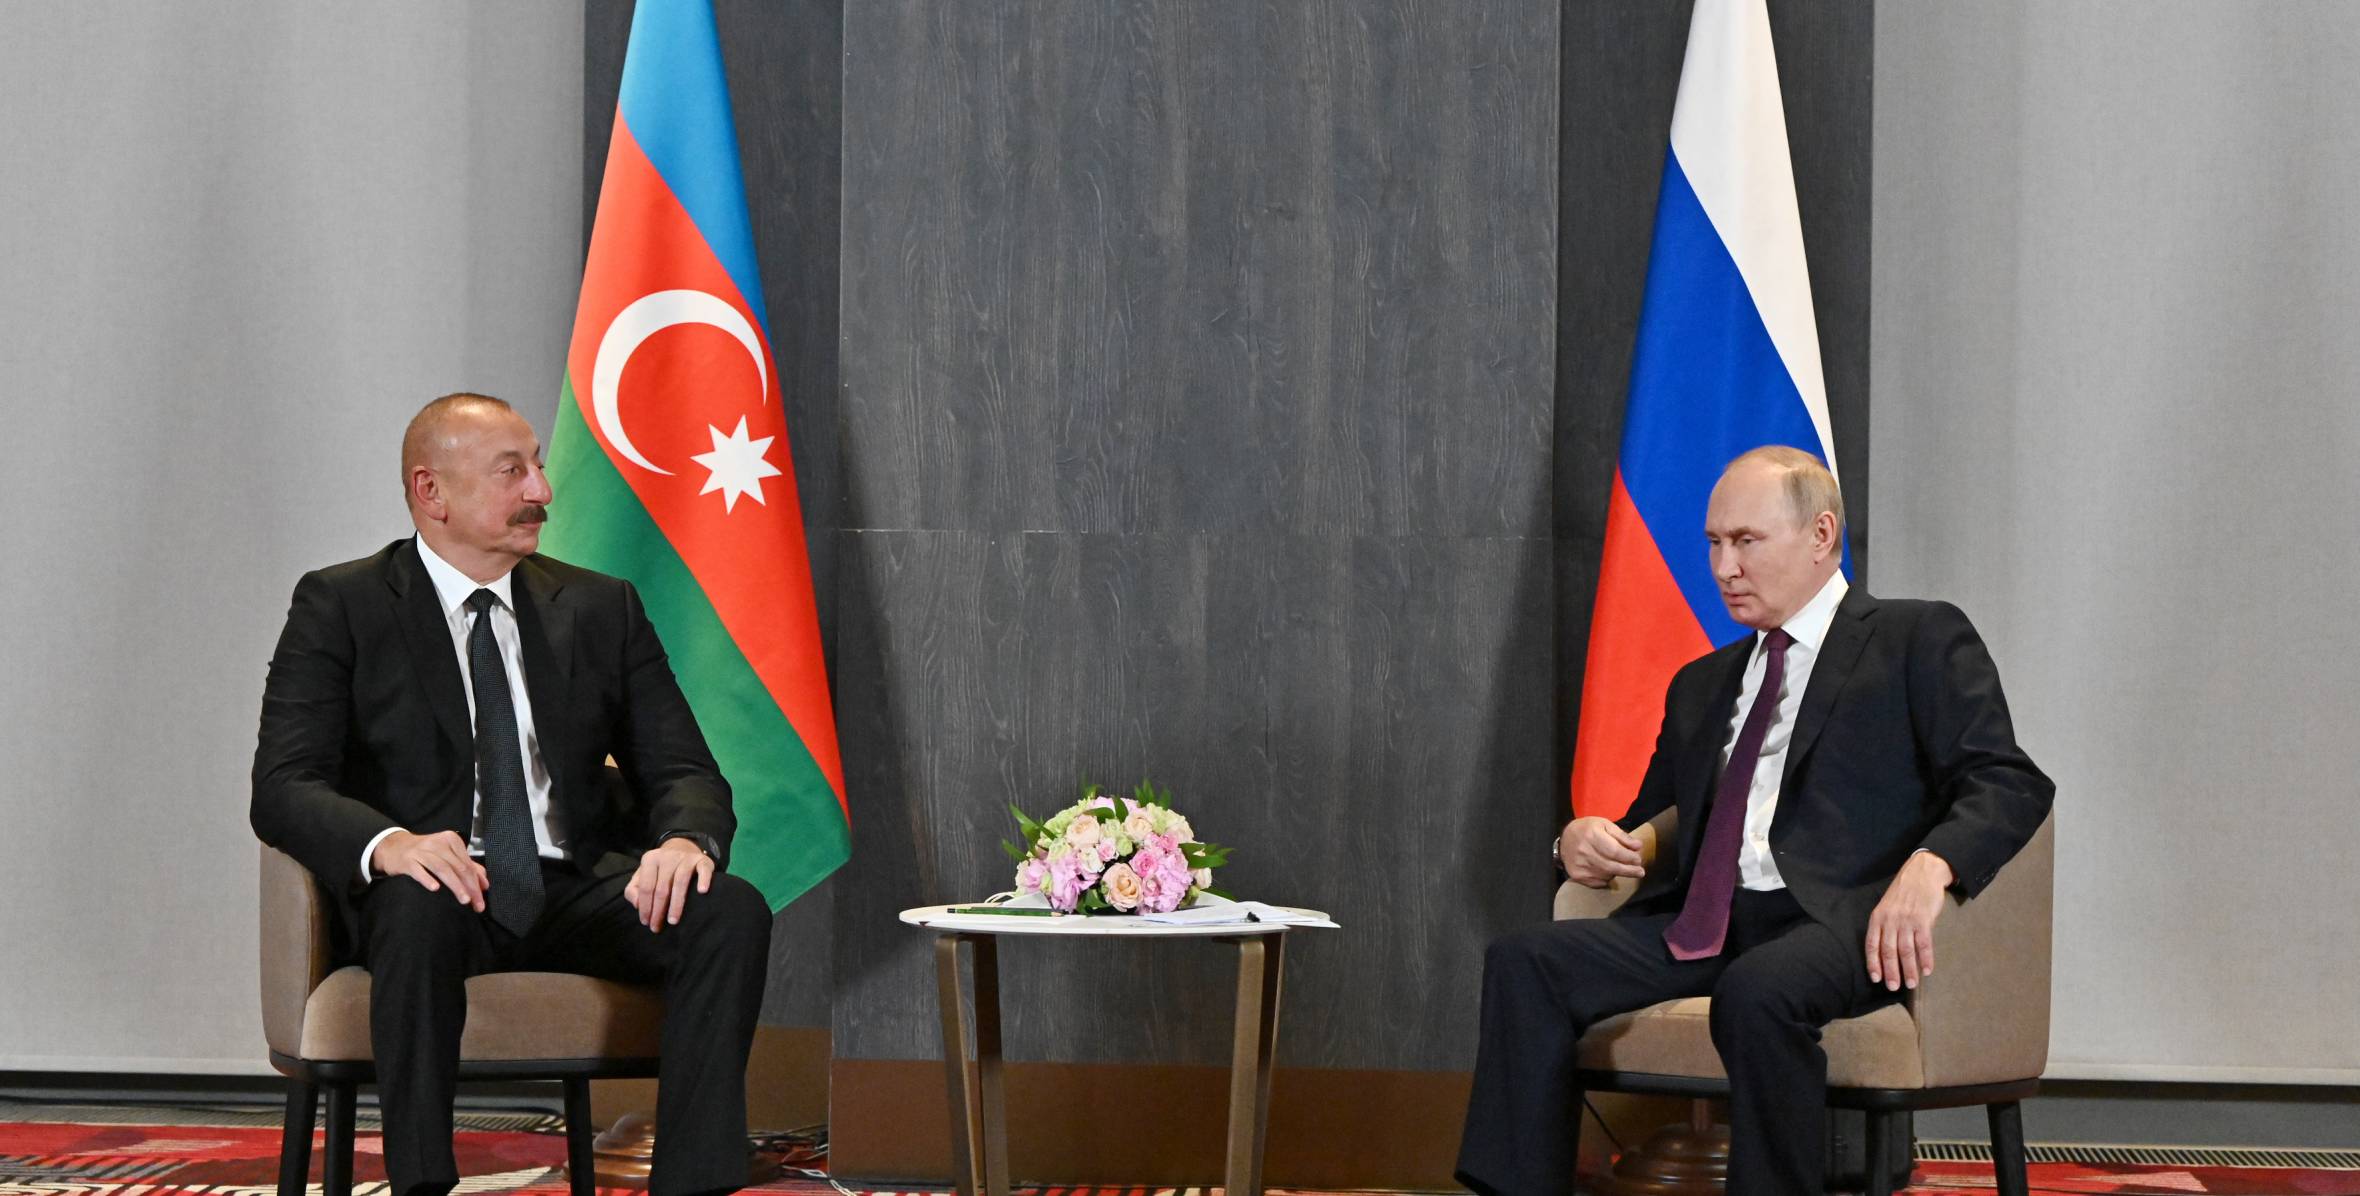 علييف يجتمع مع بوتين في كازاخستان - مباشر